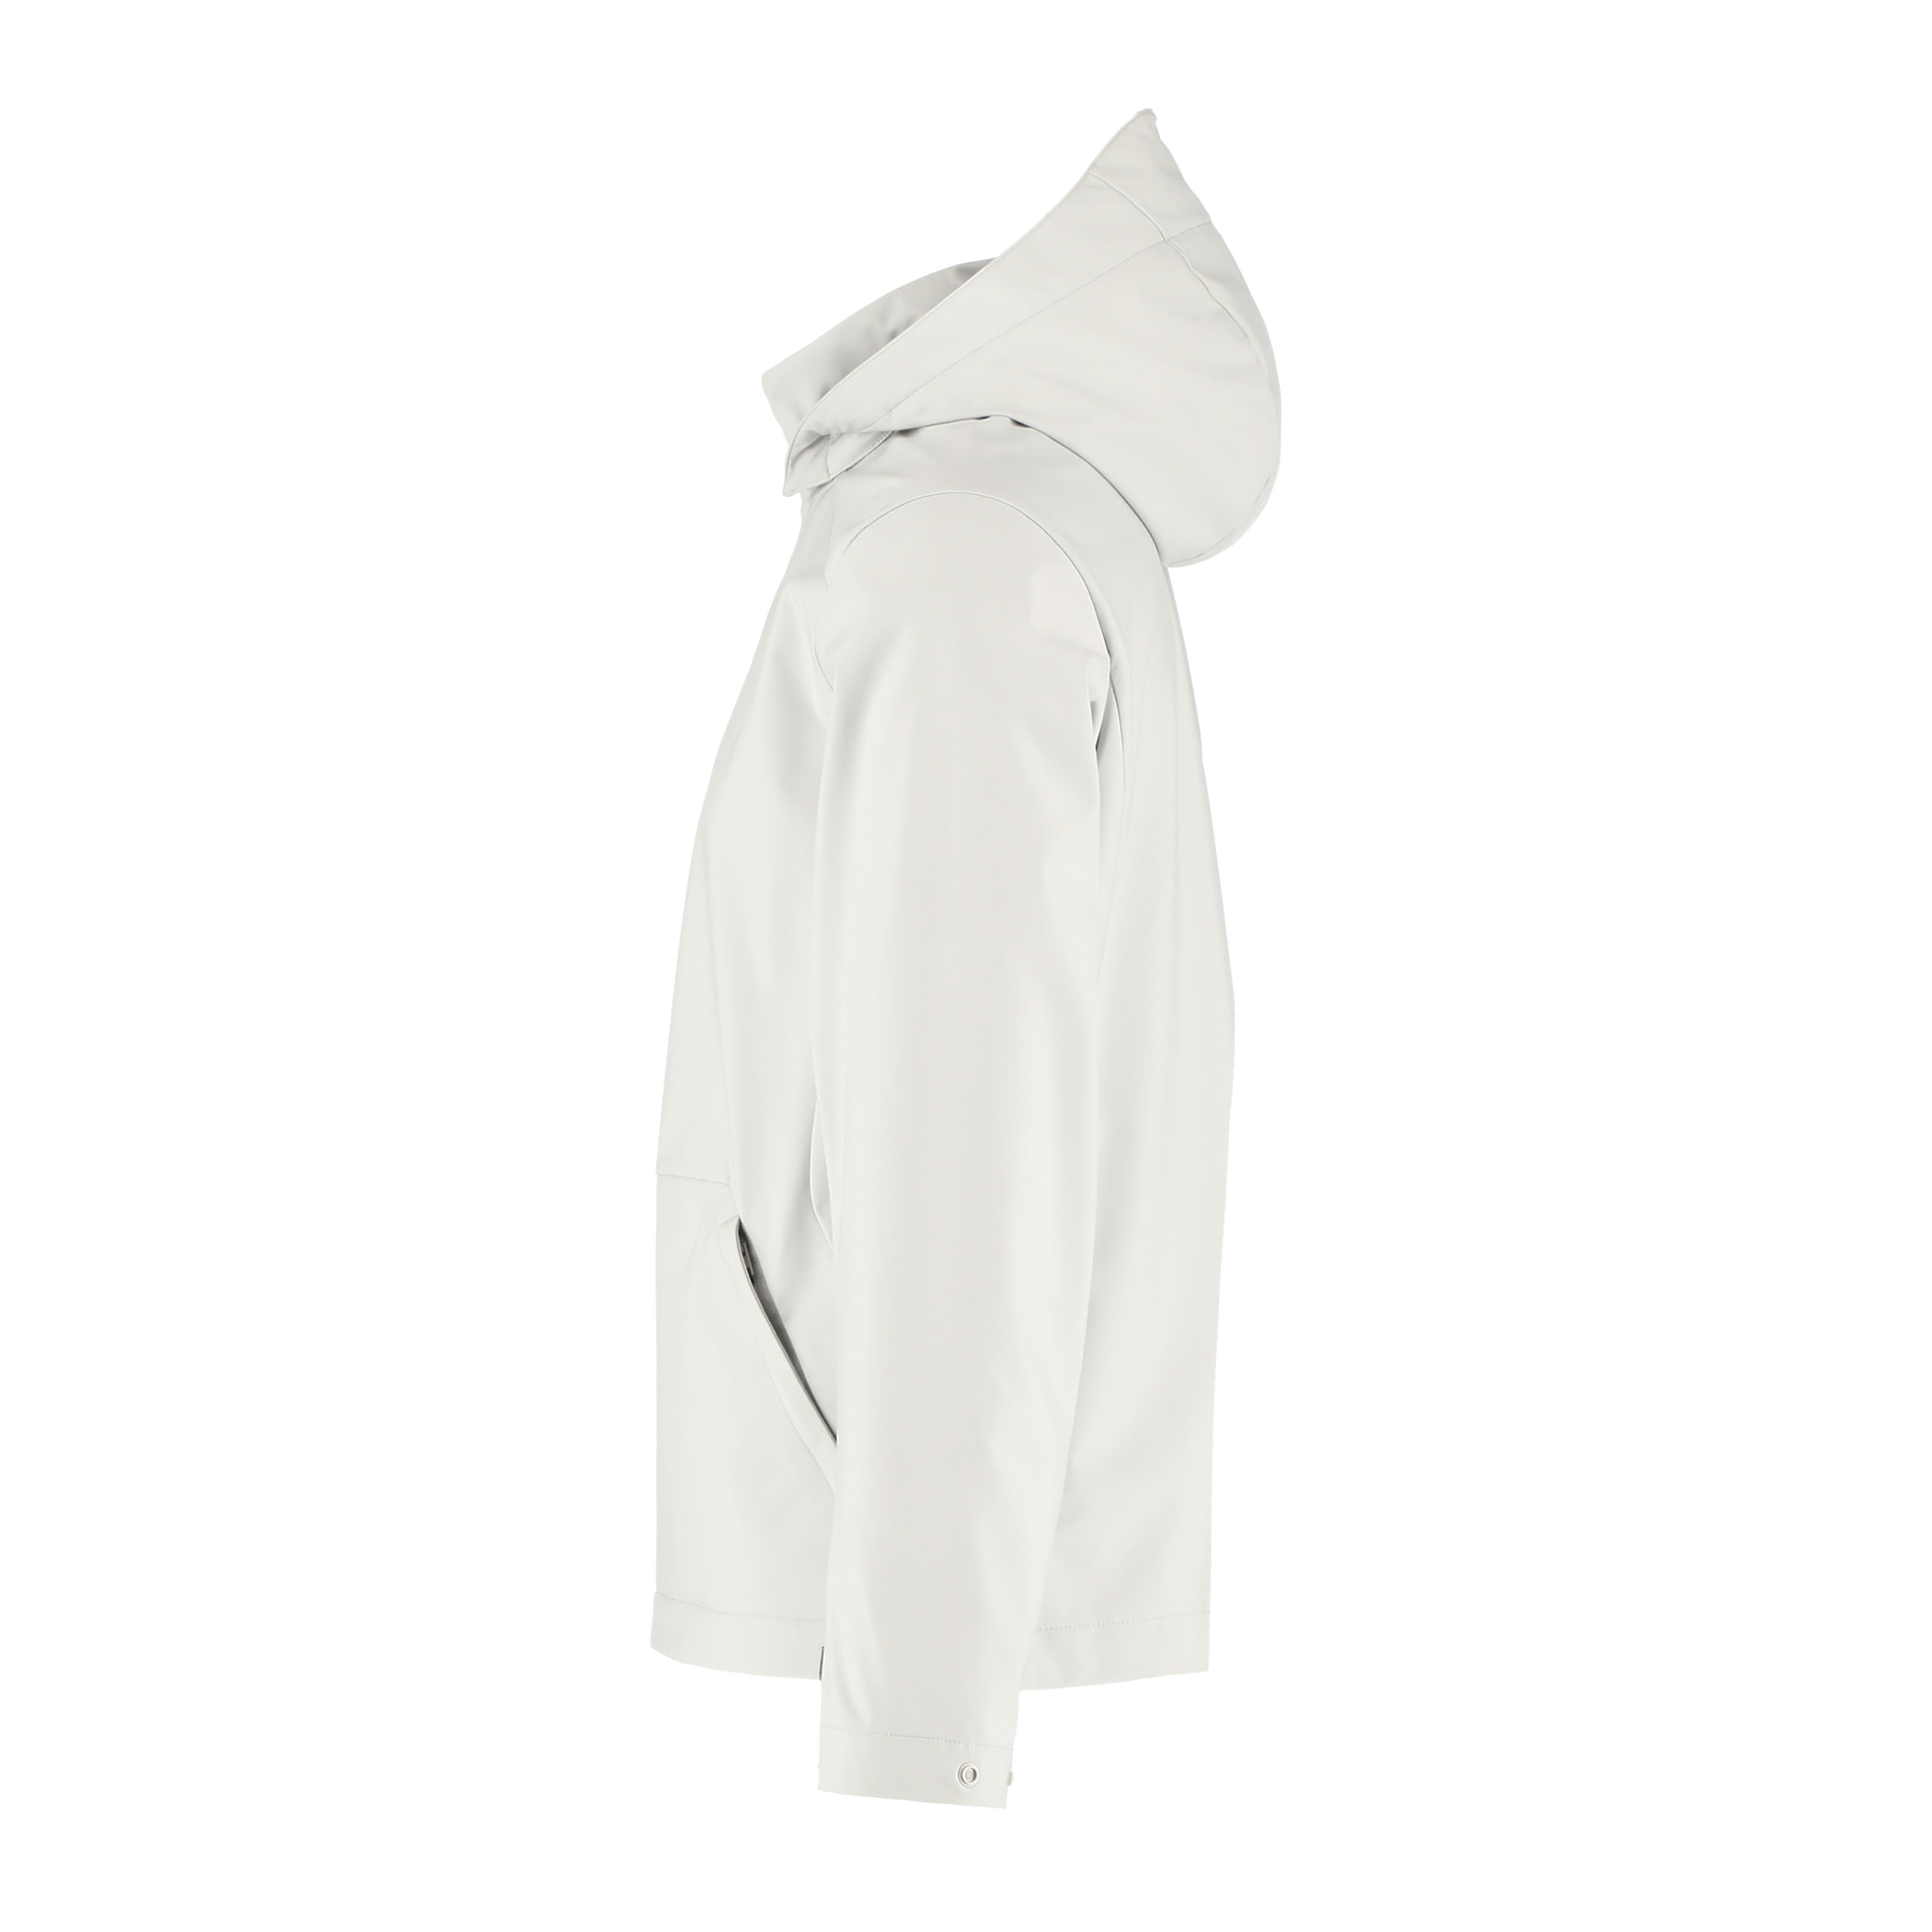 MANZANO Eco Softshell Jacket - Men's | Trimark Sportswear